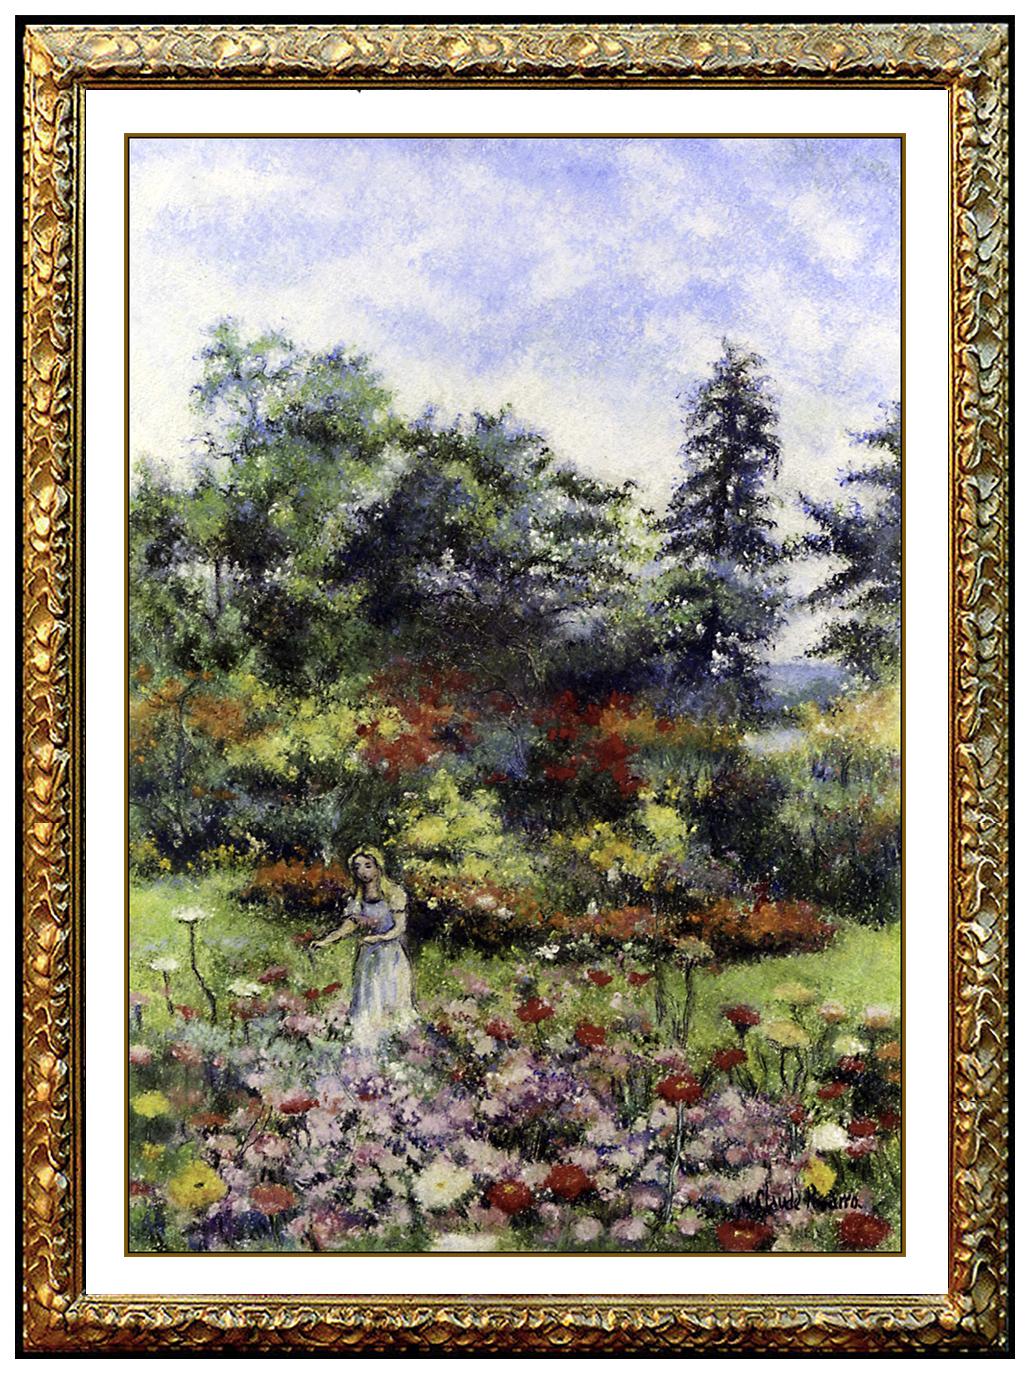 Hughes Claude Pissarro Landscape Art - H. Claude Pissarro Original Pastel Painting Hand Signed French Landscape Floral